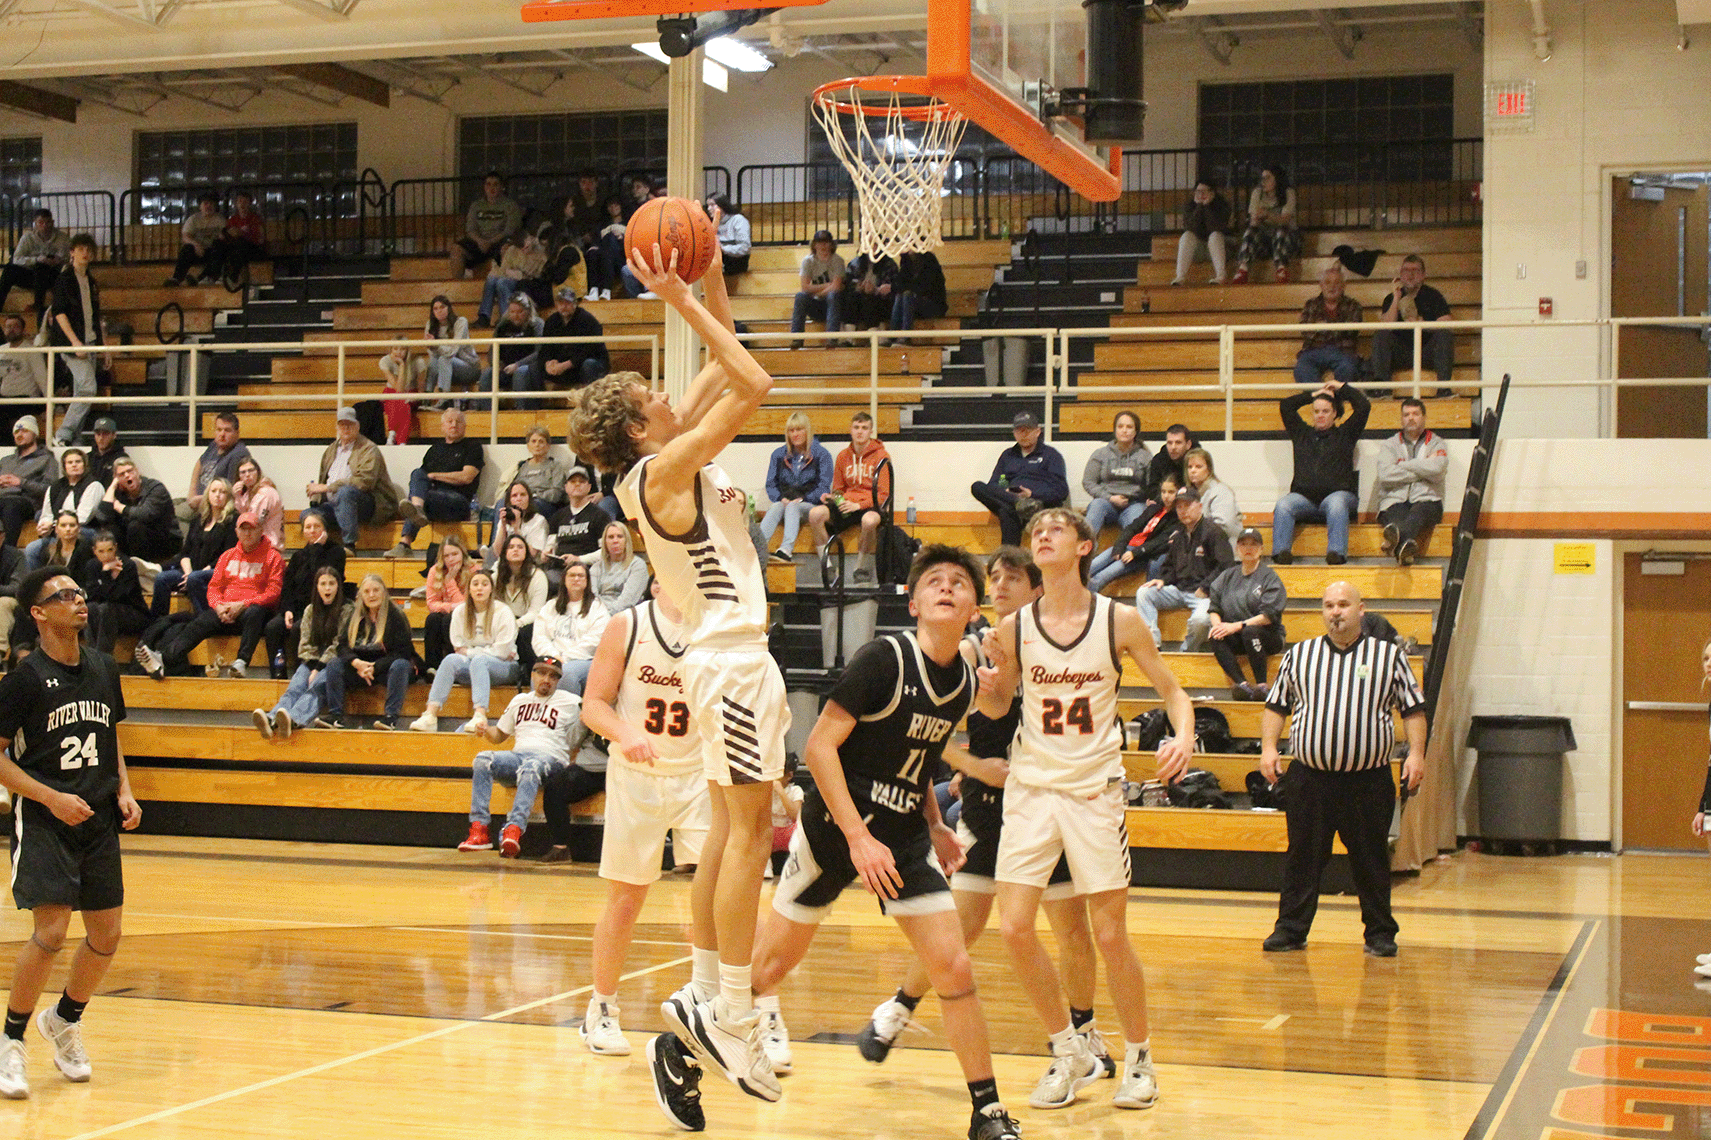 Nelsonville-York player jumps for the hoop.